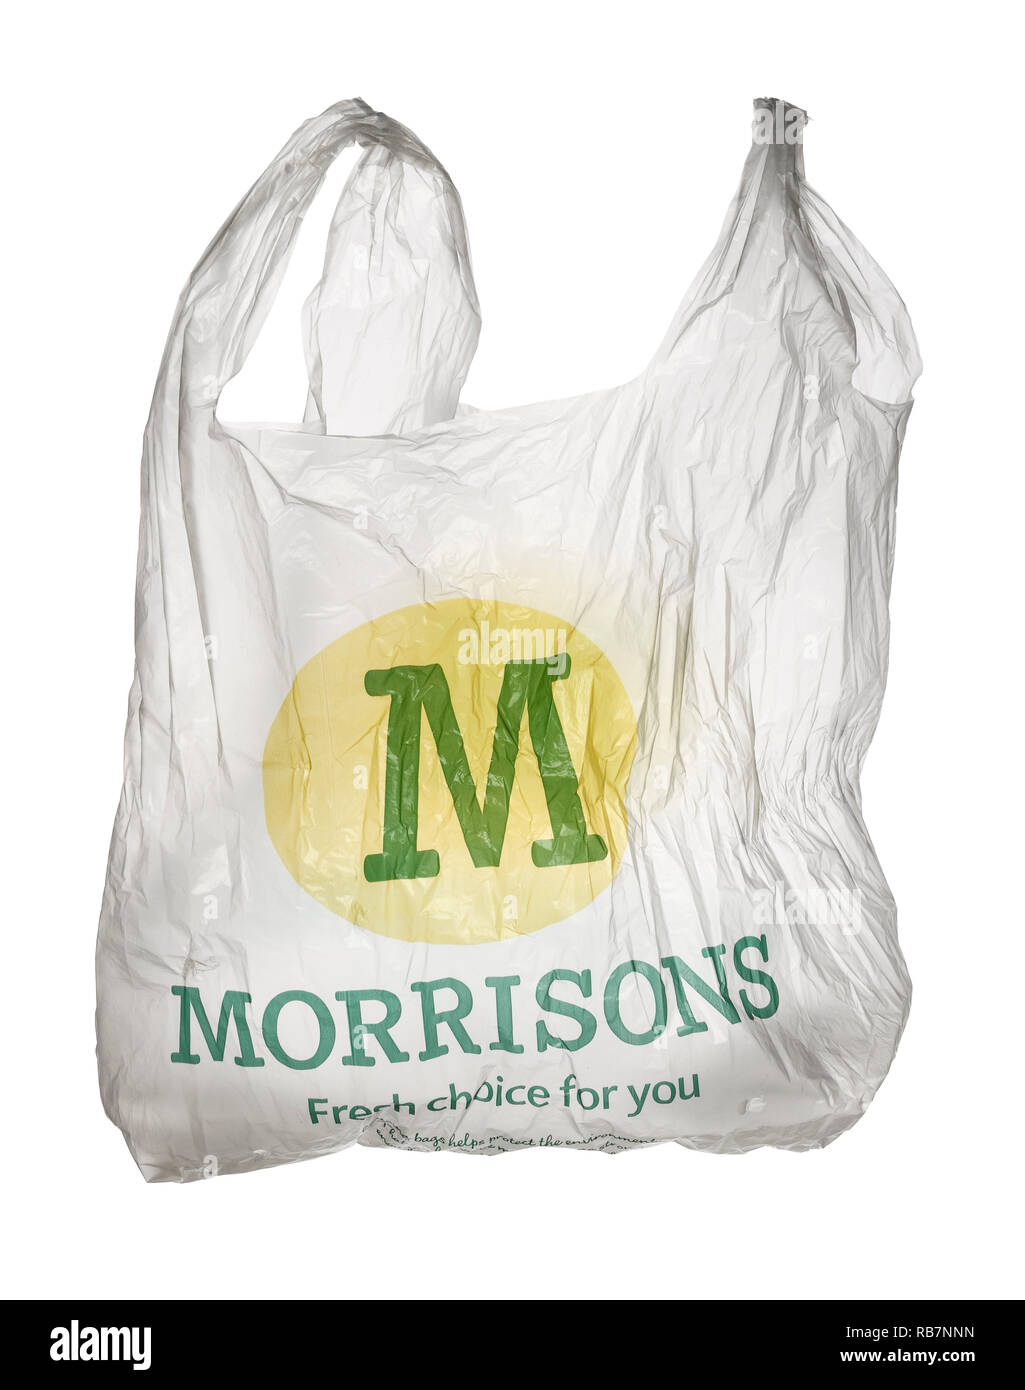 A Morrisons supermarket carrier bag Stock Photo - Alamy